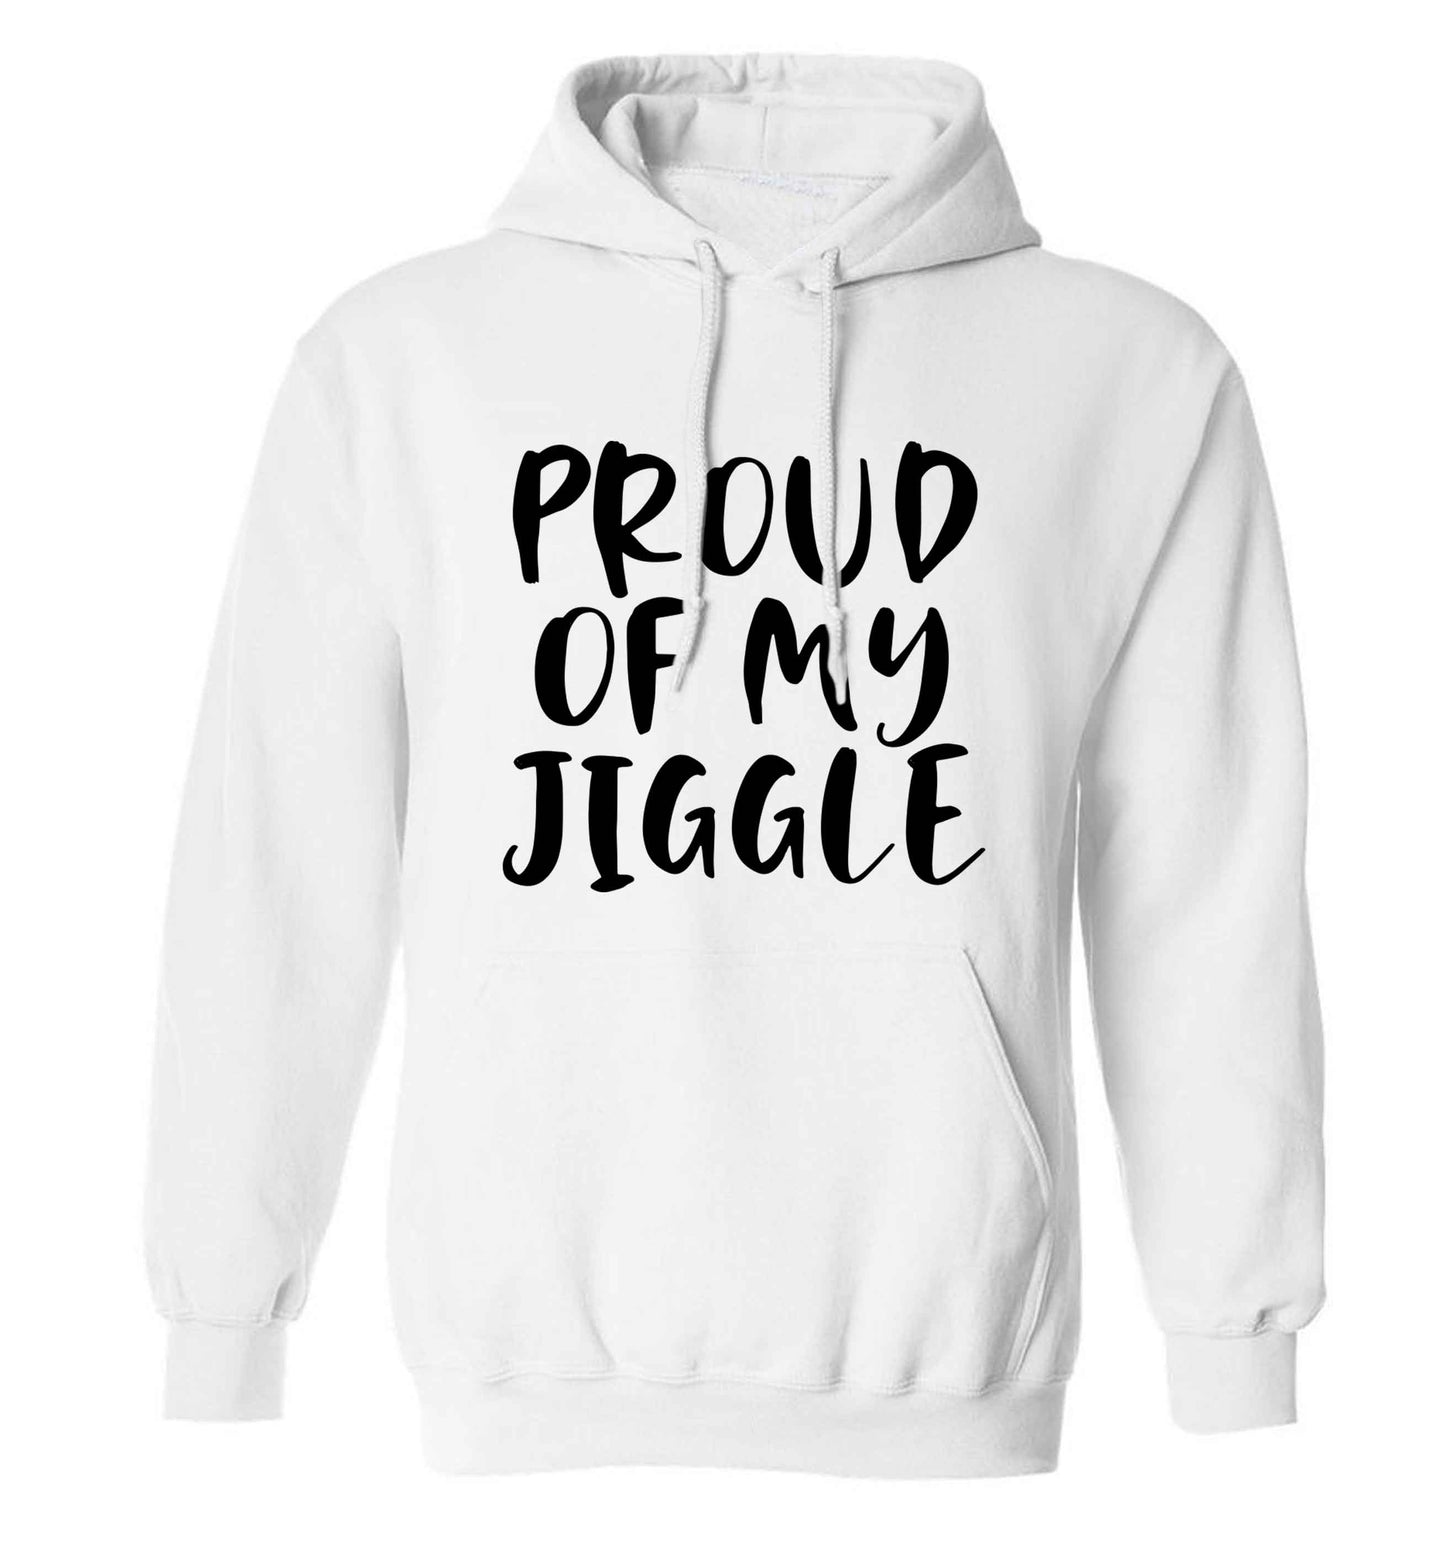 Proud of my jiggle adults unisex white hoodie 2XL